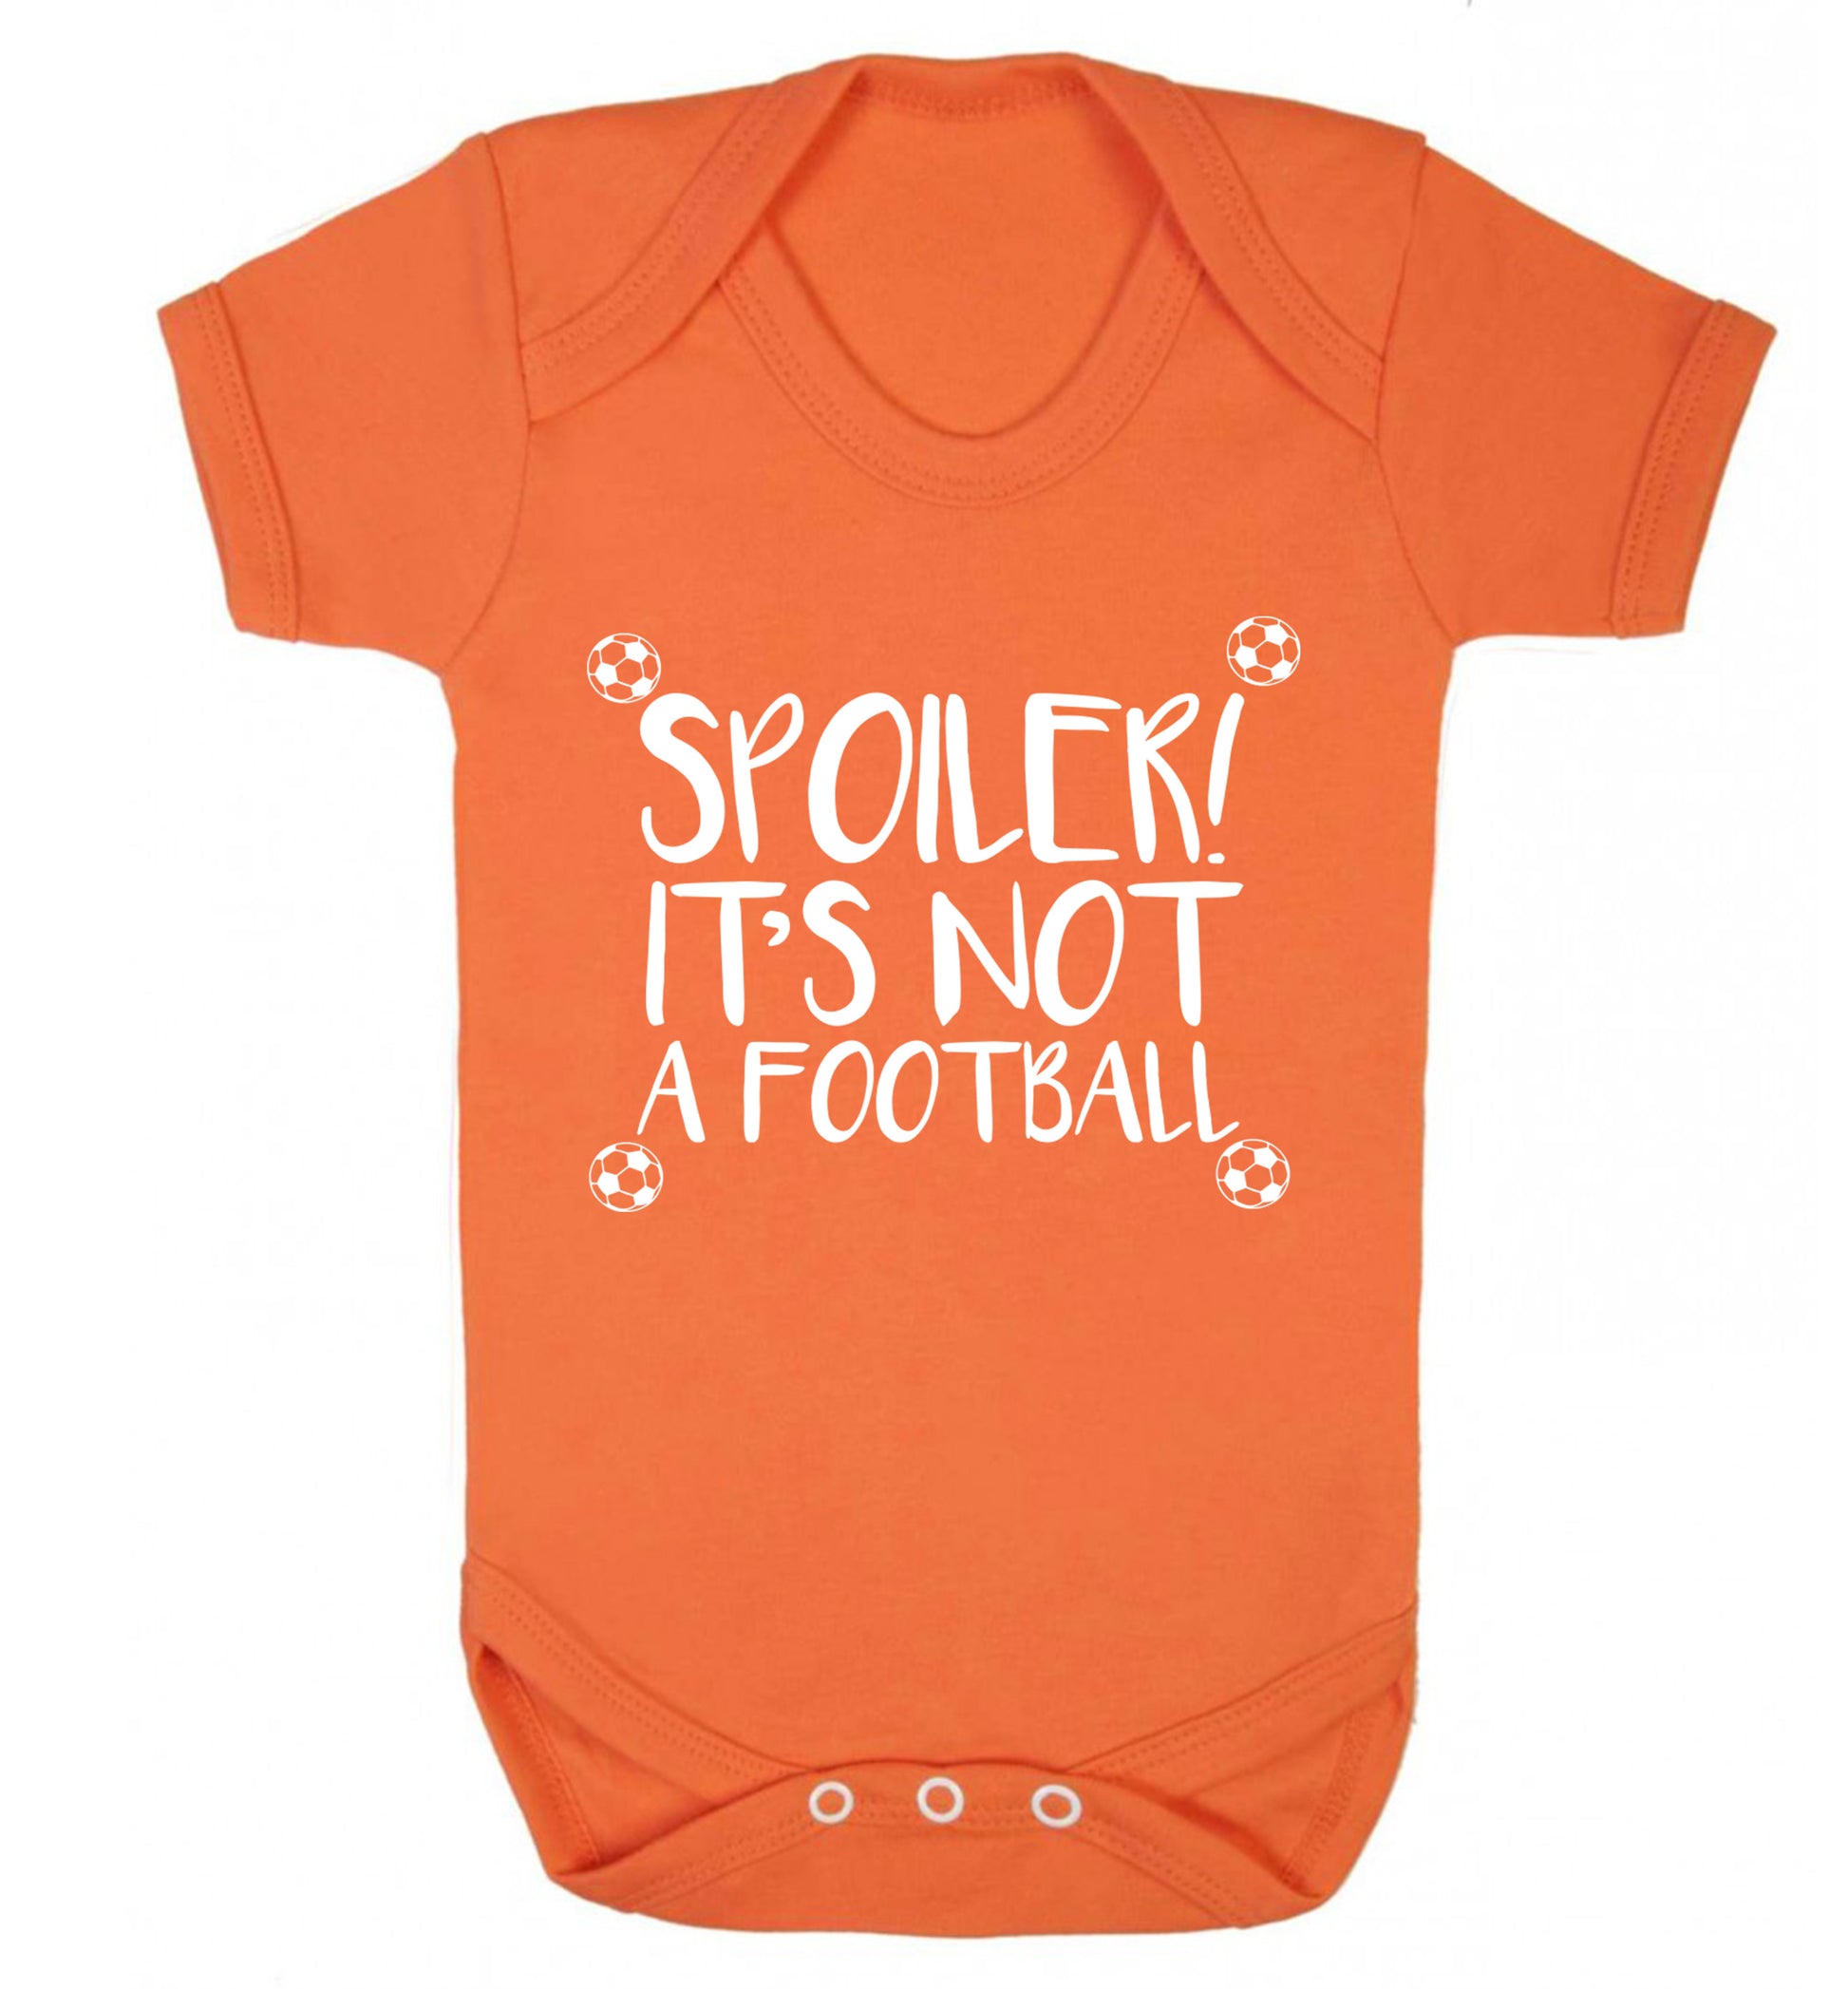 Spoiler it's not a football Baby Vest orange 18-24 months